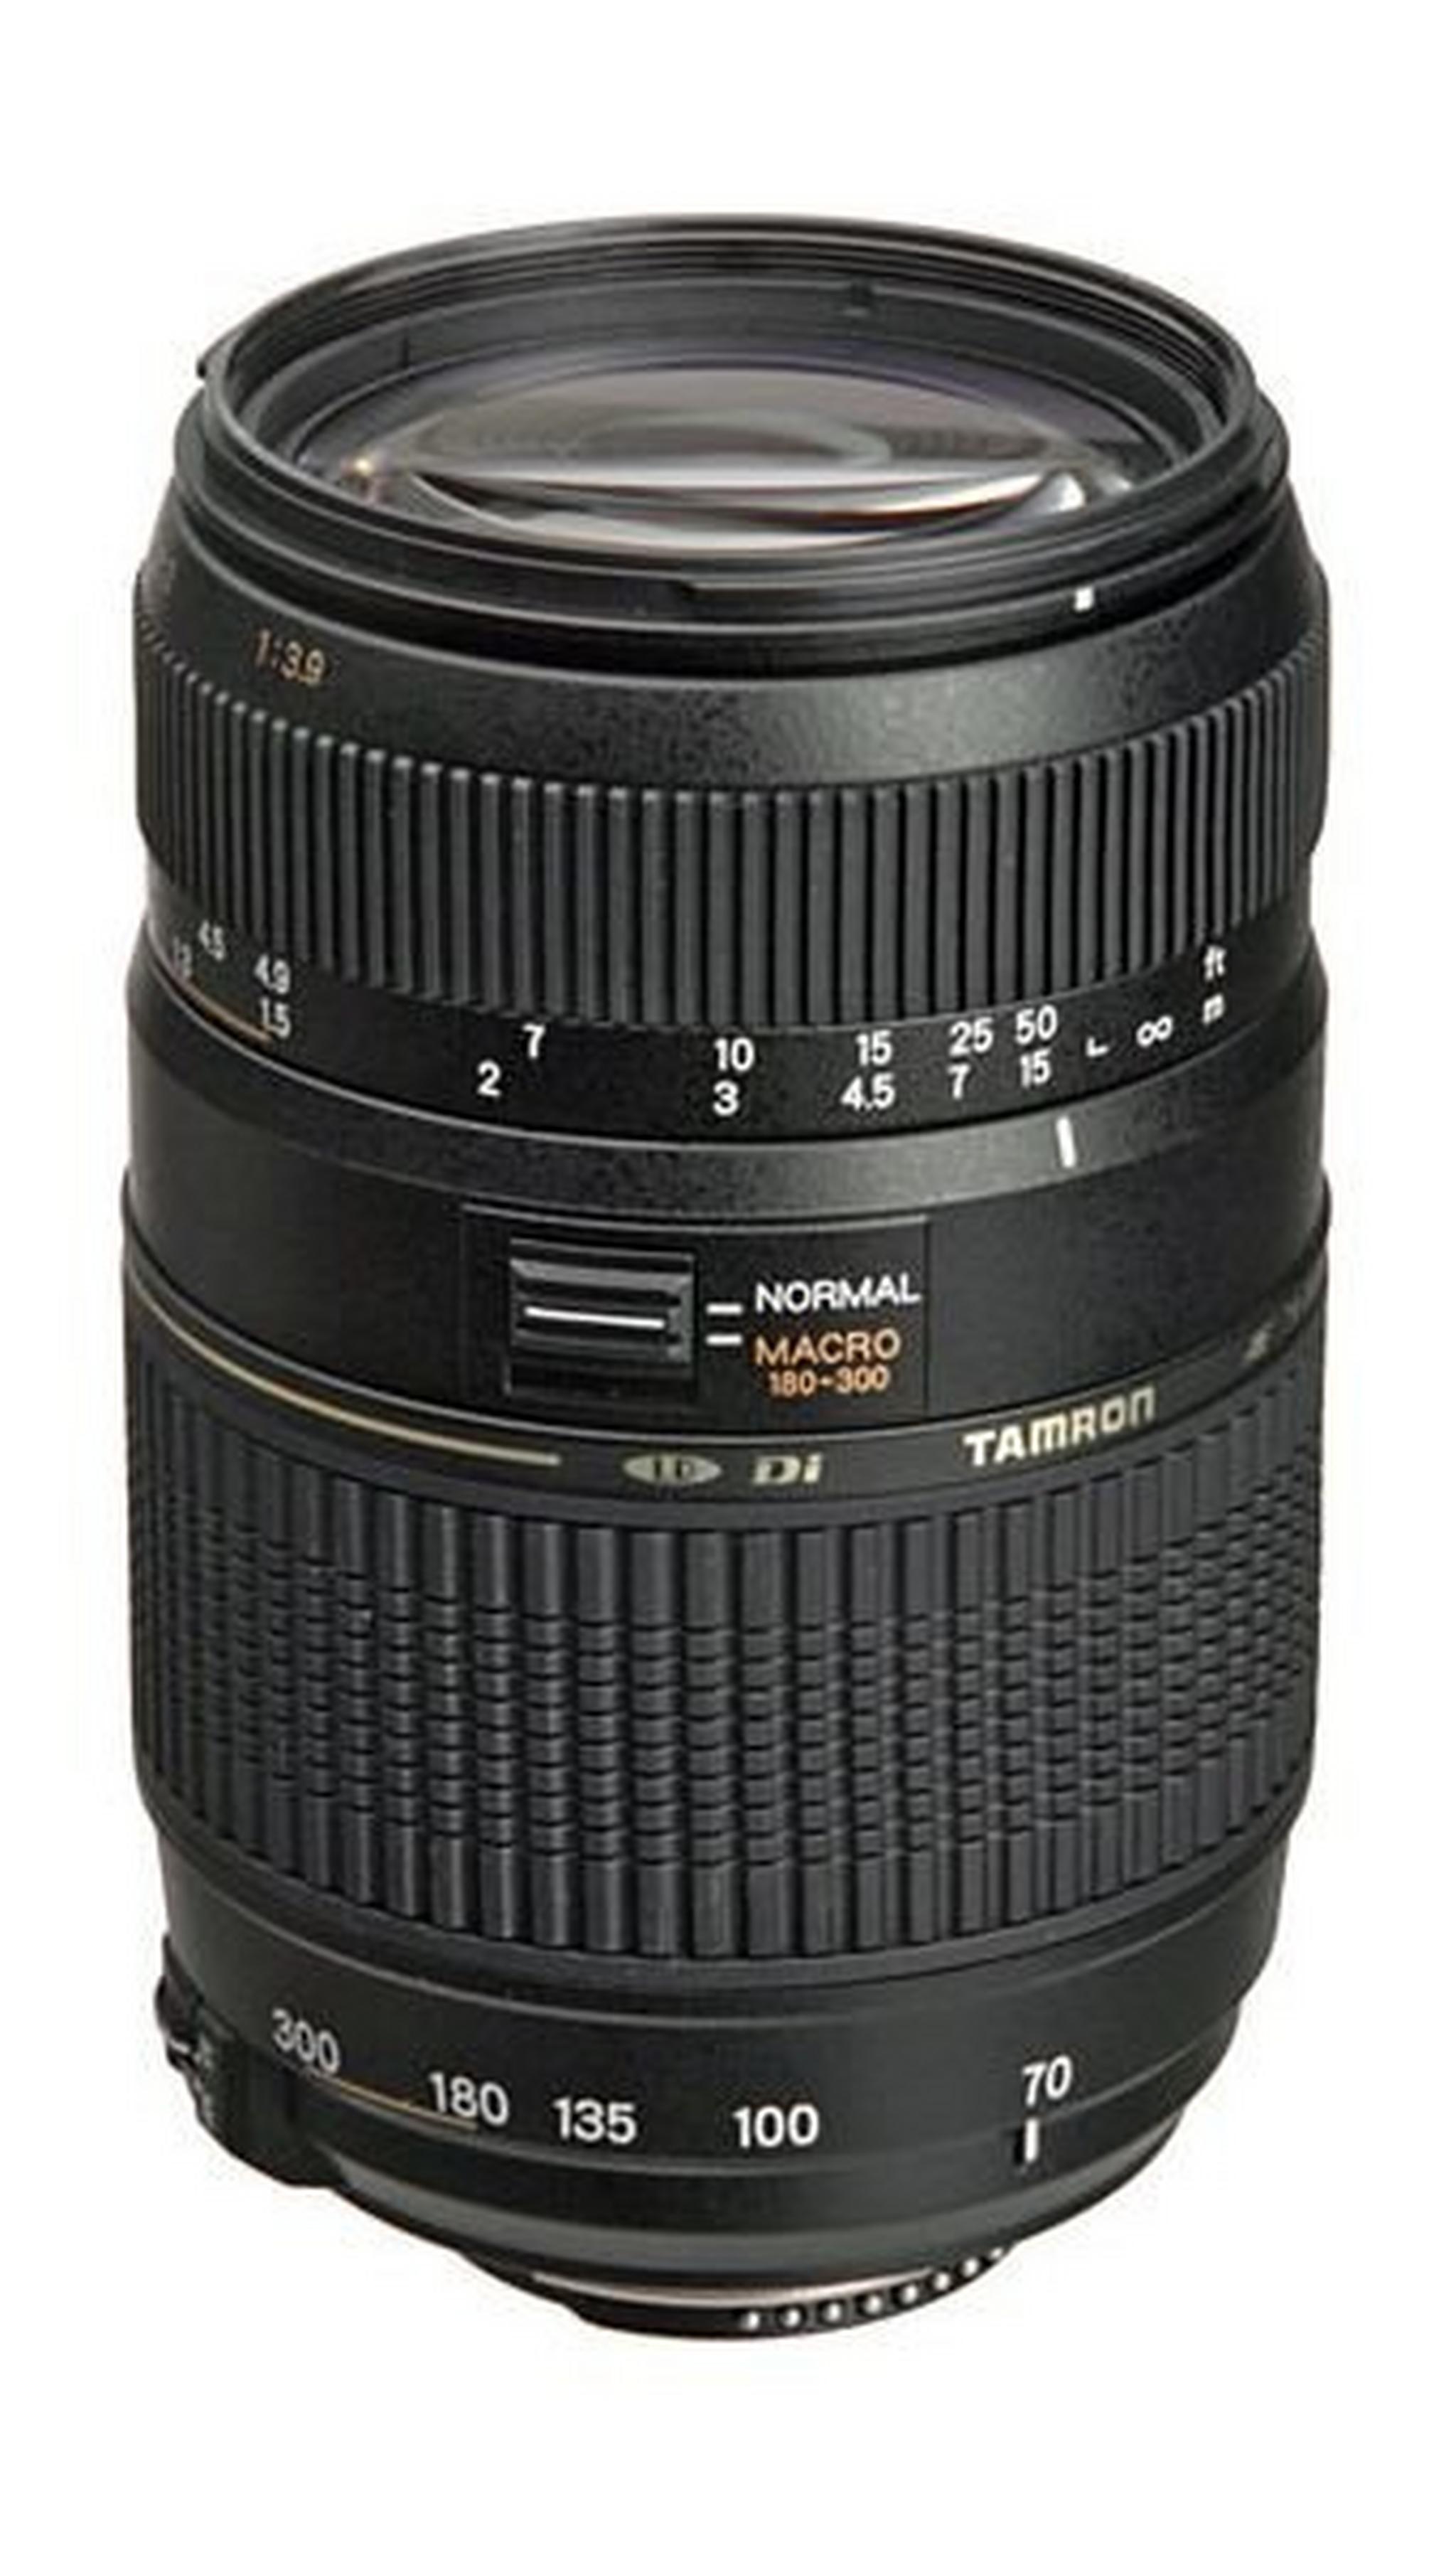 Tamron 70-300mm f/4-5.6 Di LD Macro Autofocus Lens for Canon DSLR Camera